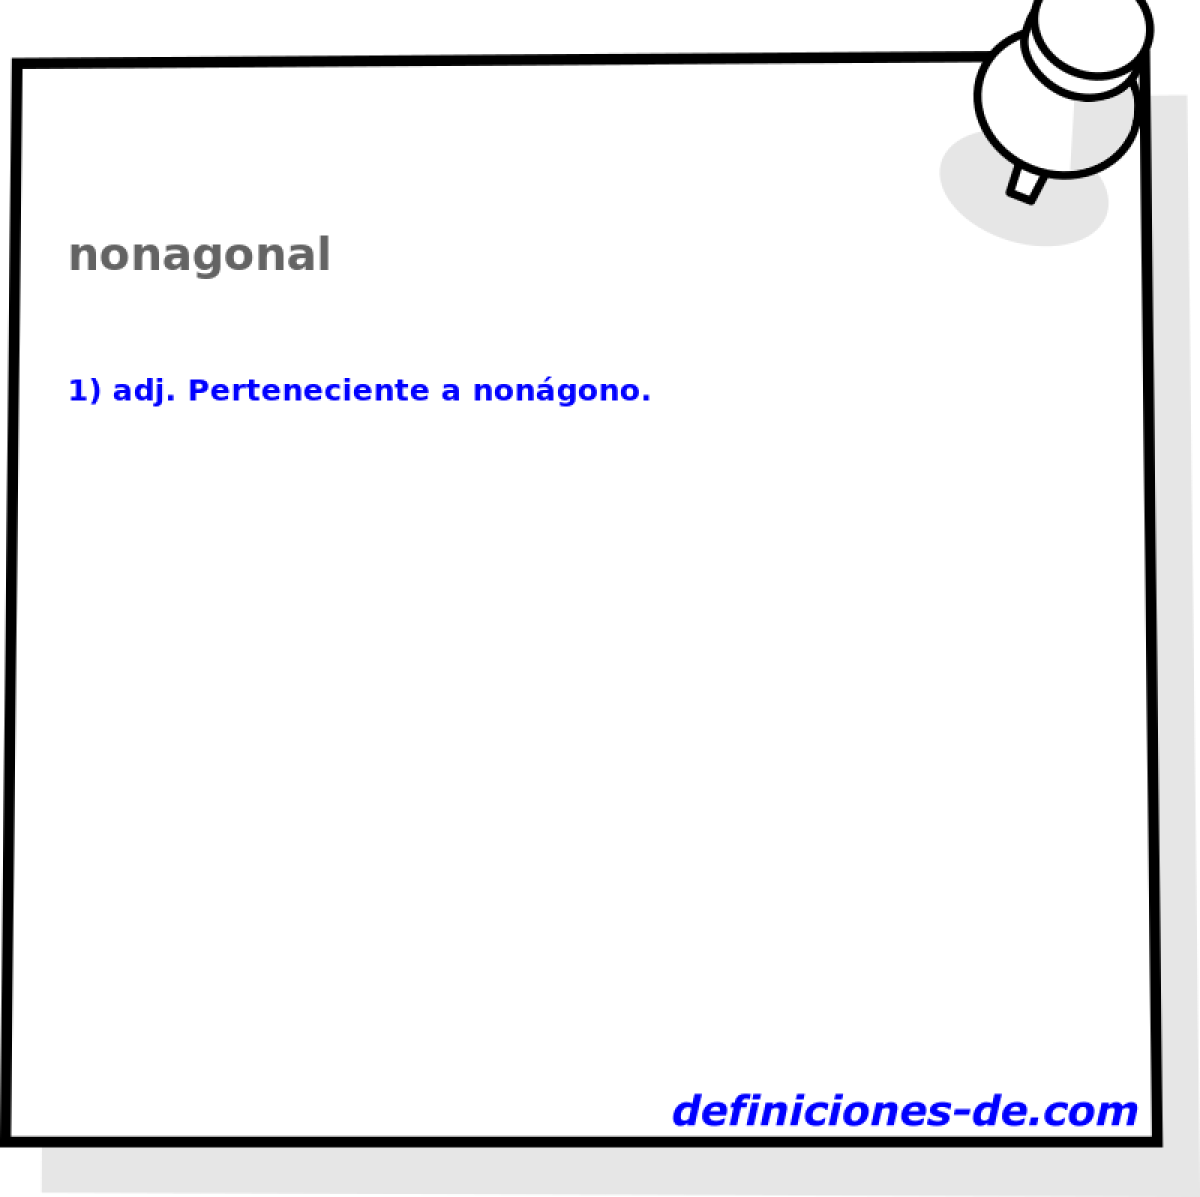 nonagonal 